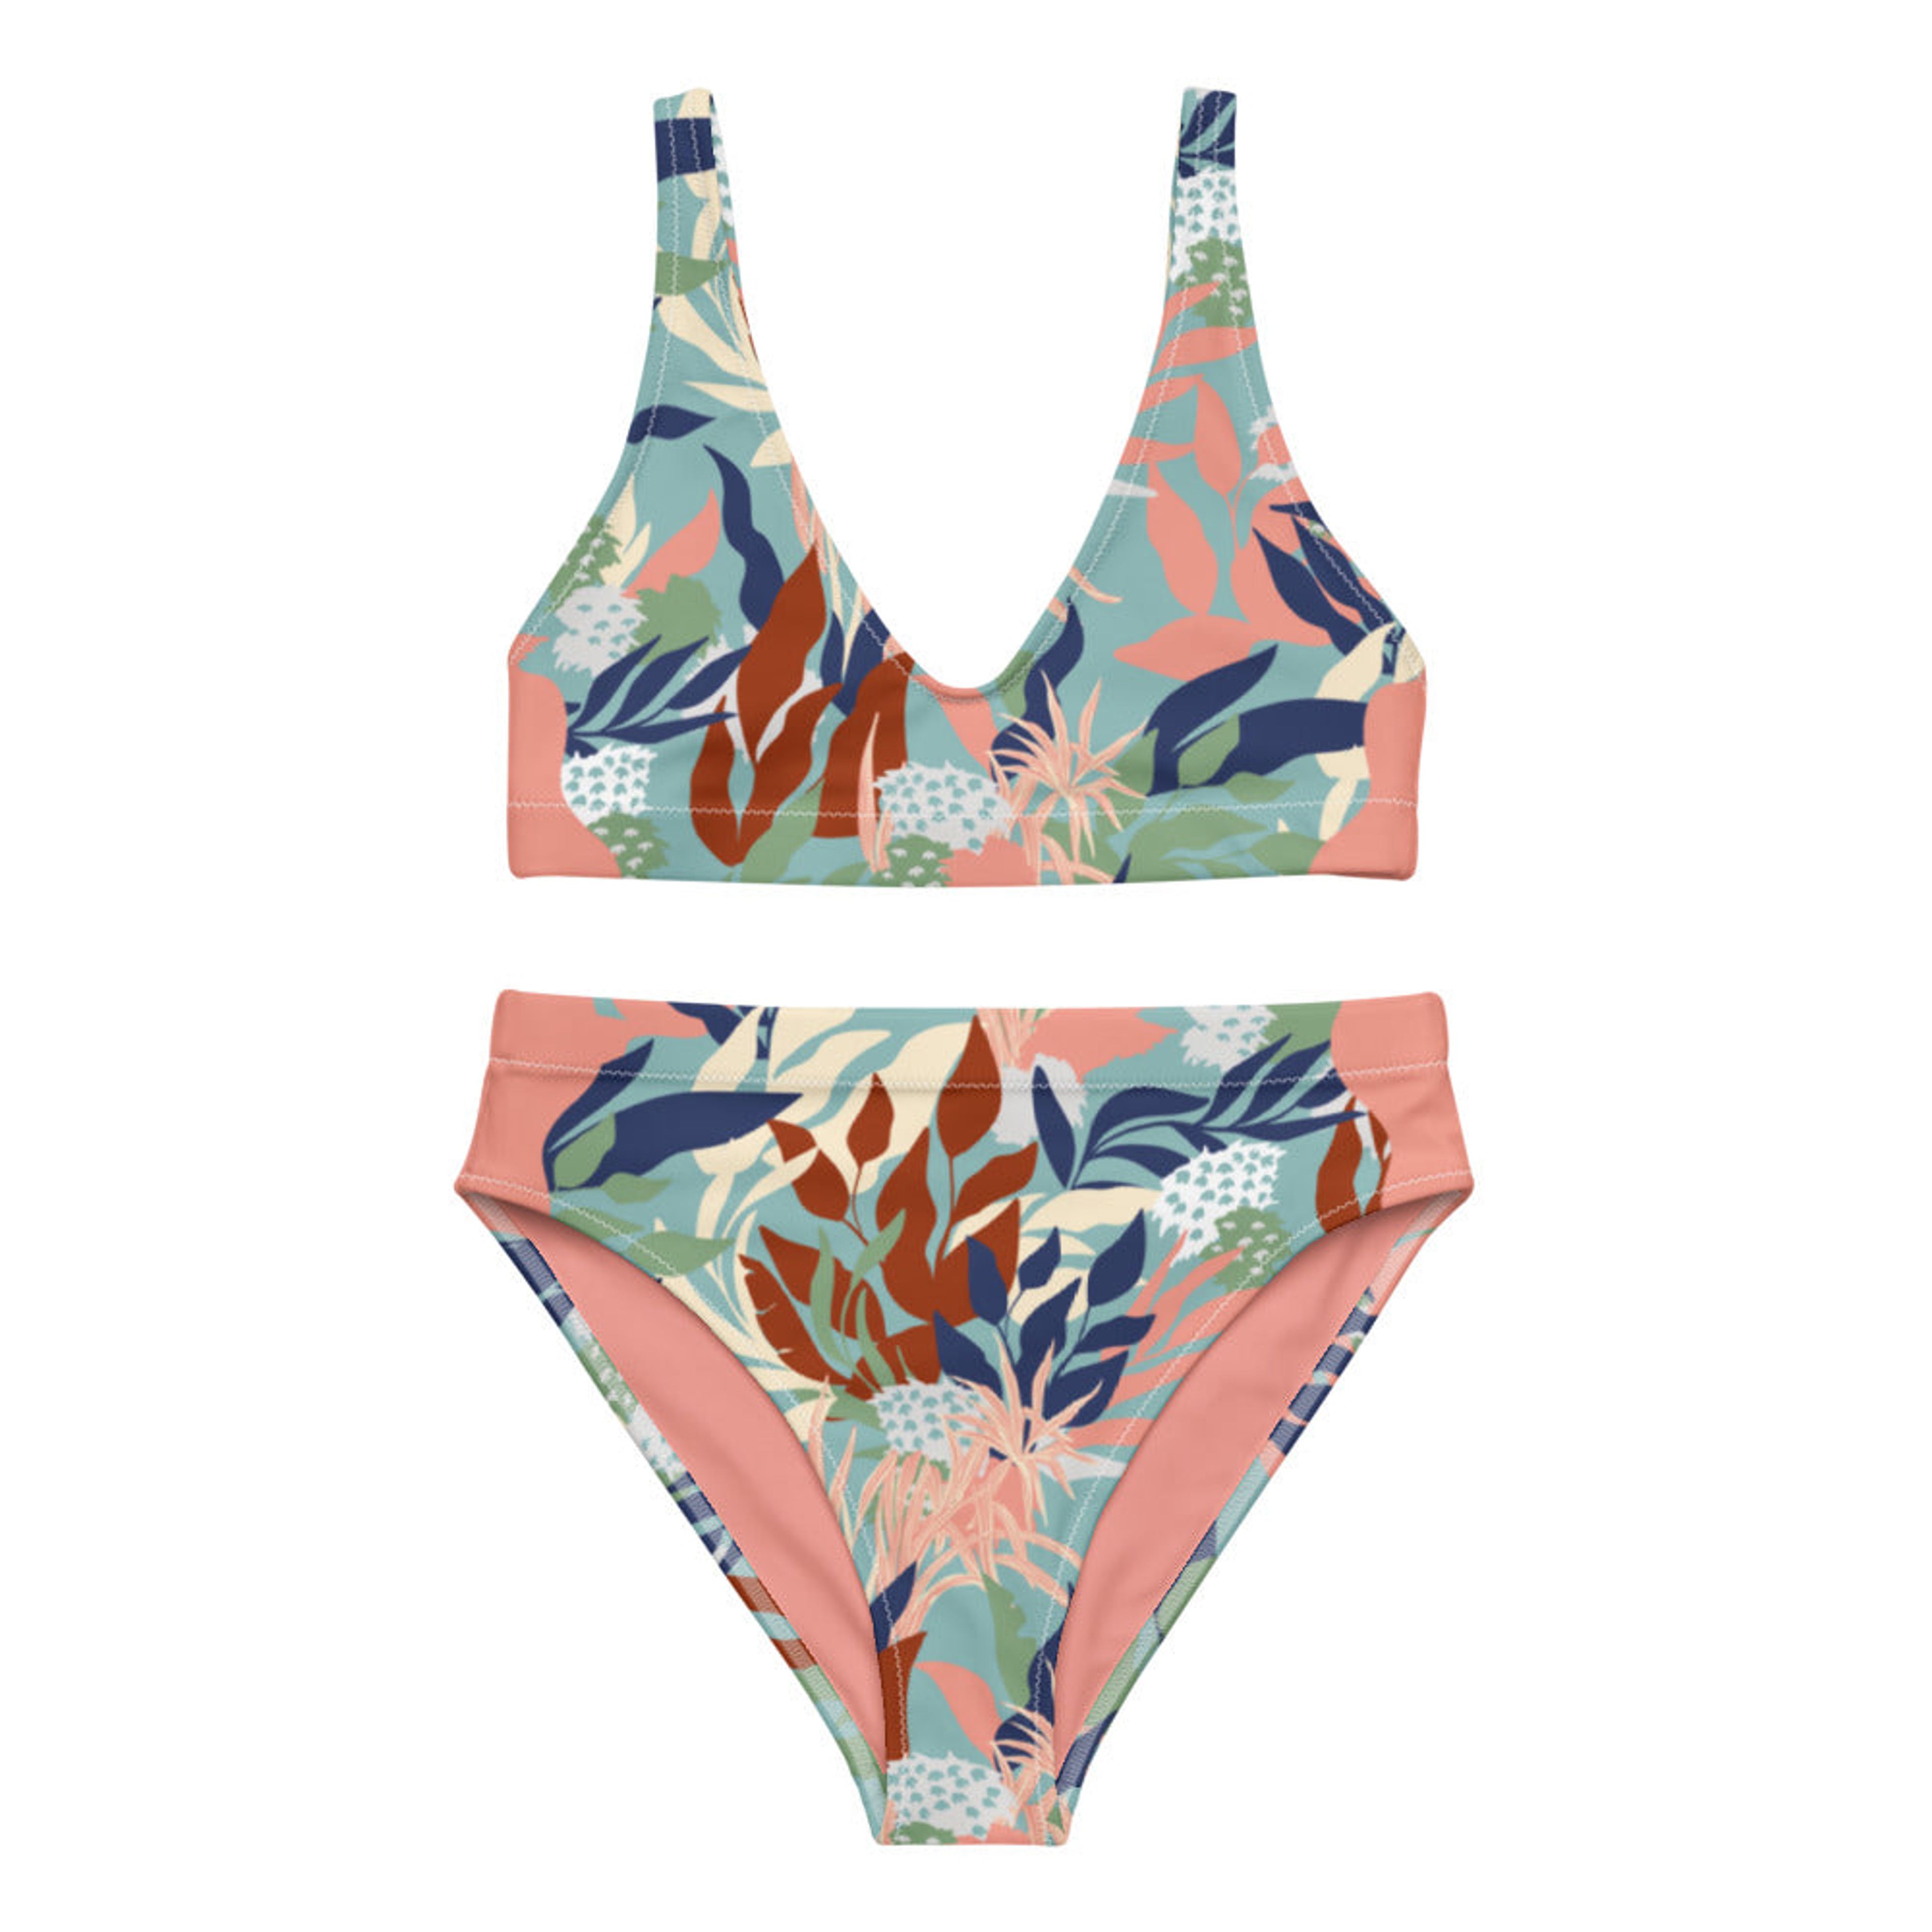 From Rachel Green Foliage Bikini Set (2 pieces) on Marmalade